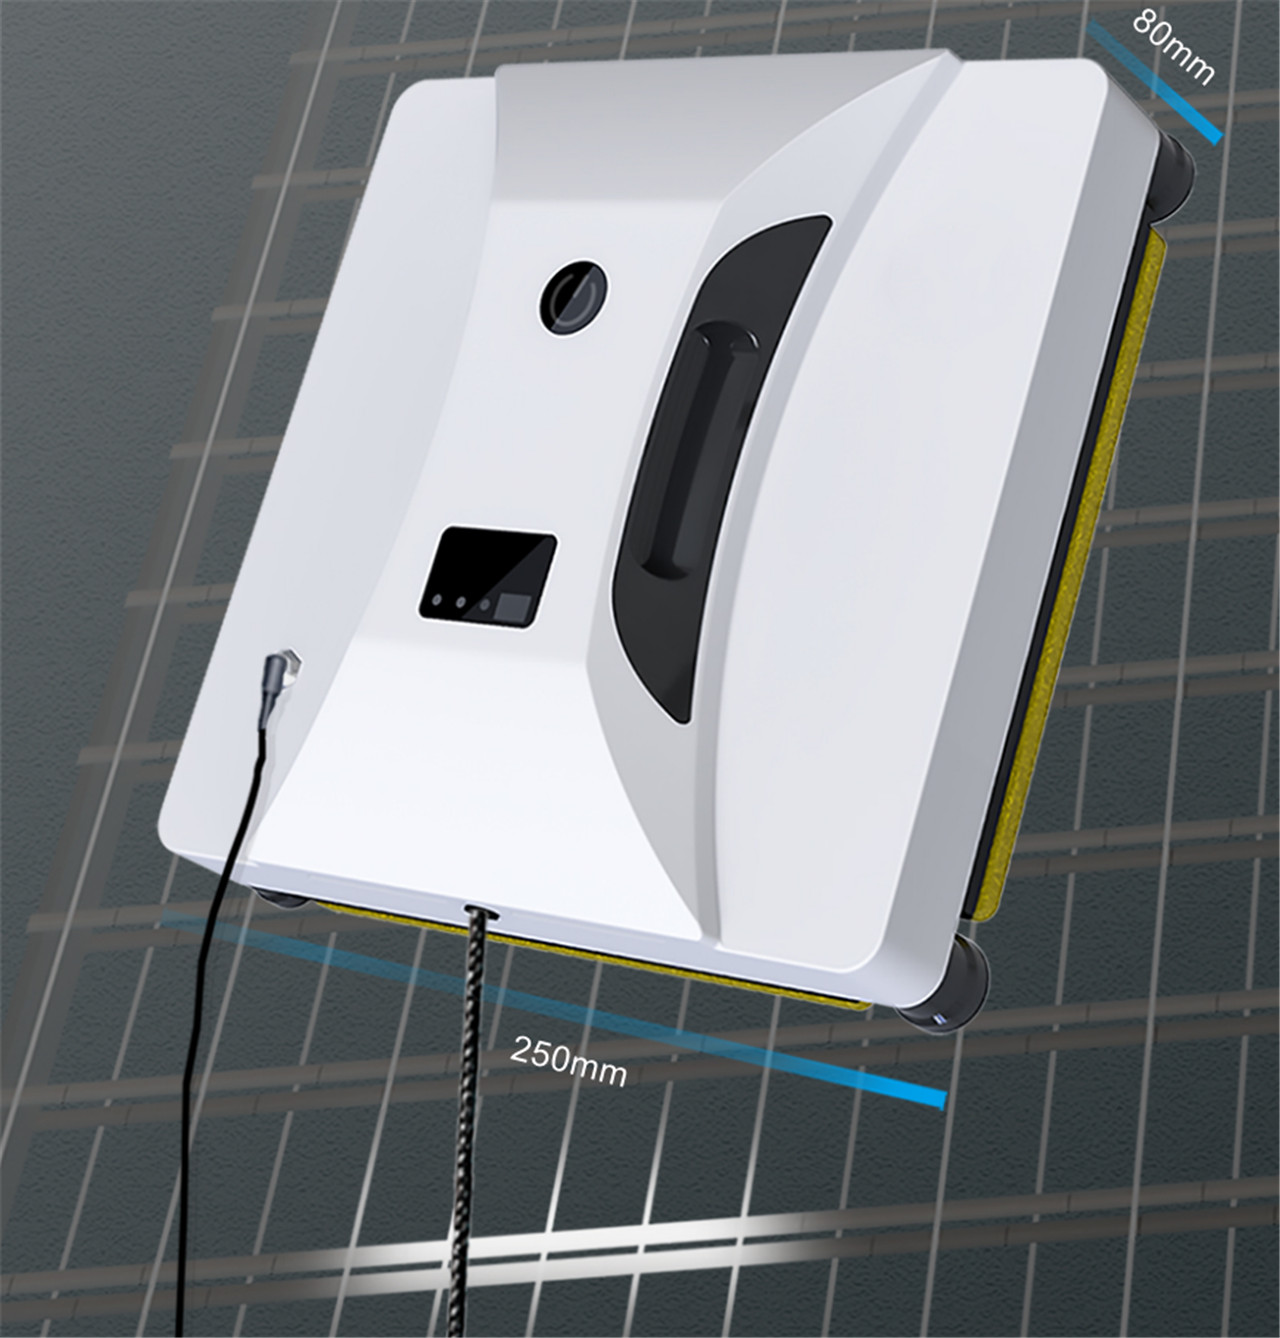 Panavox HCR-05 Robot limpiador de ventanas inteligente Robot limpiador automático inteligente para ventanas interiores y exteriores (10)